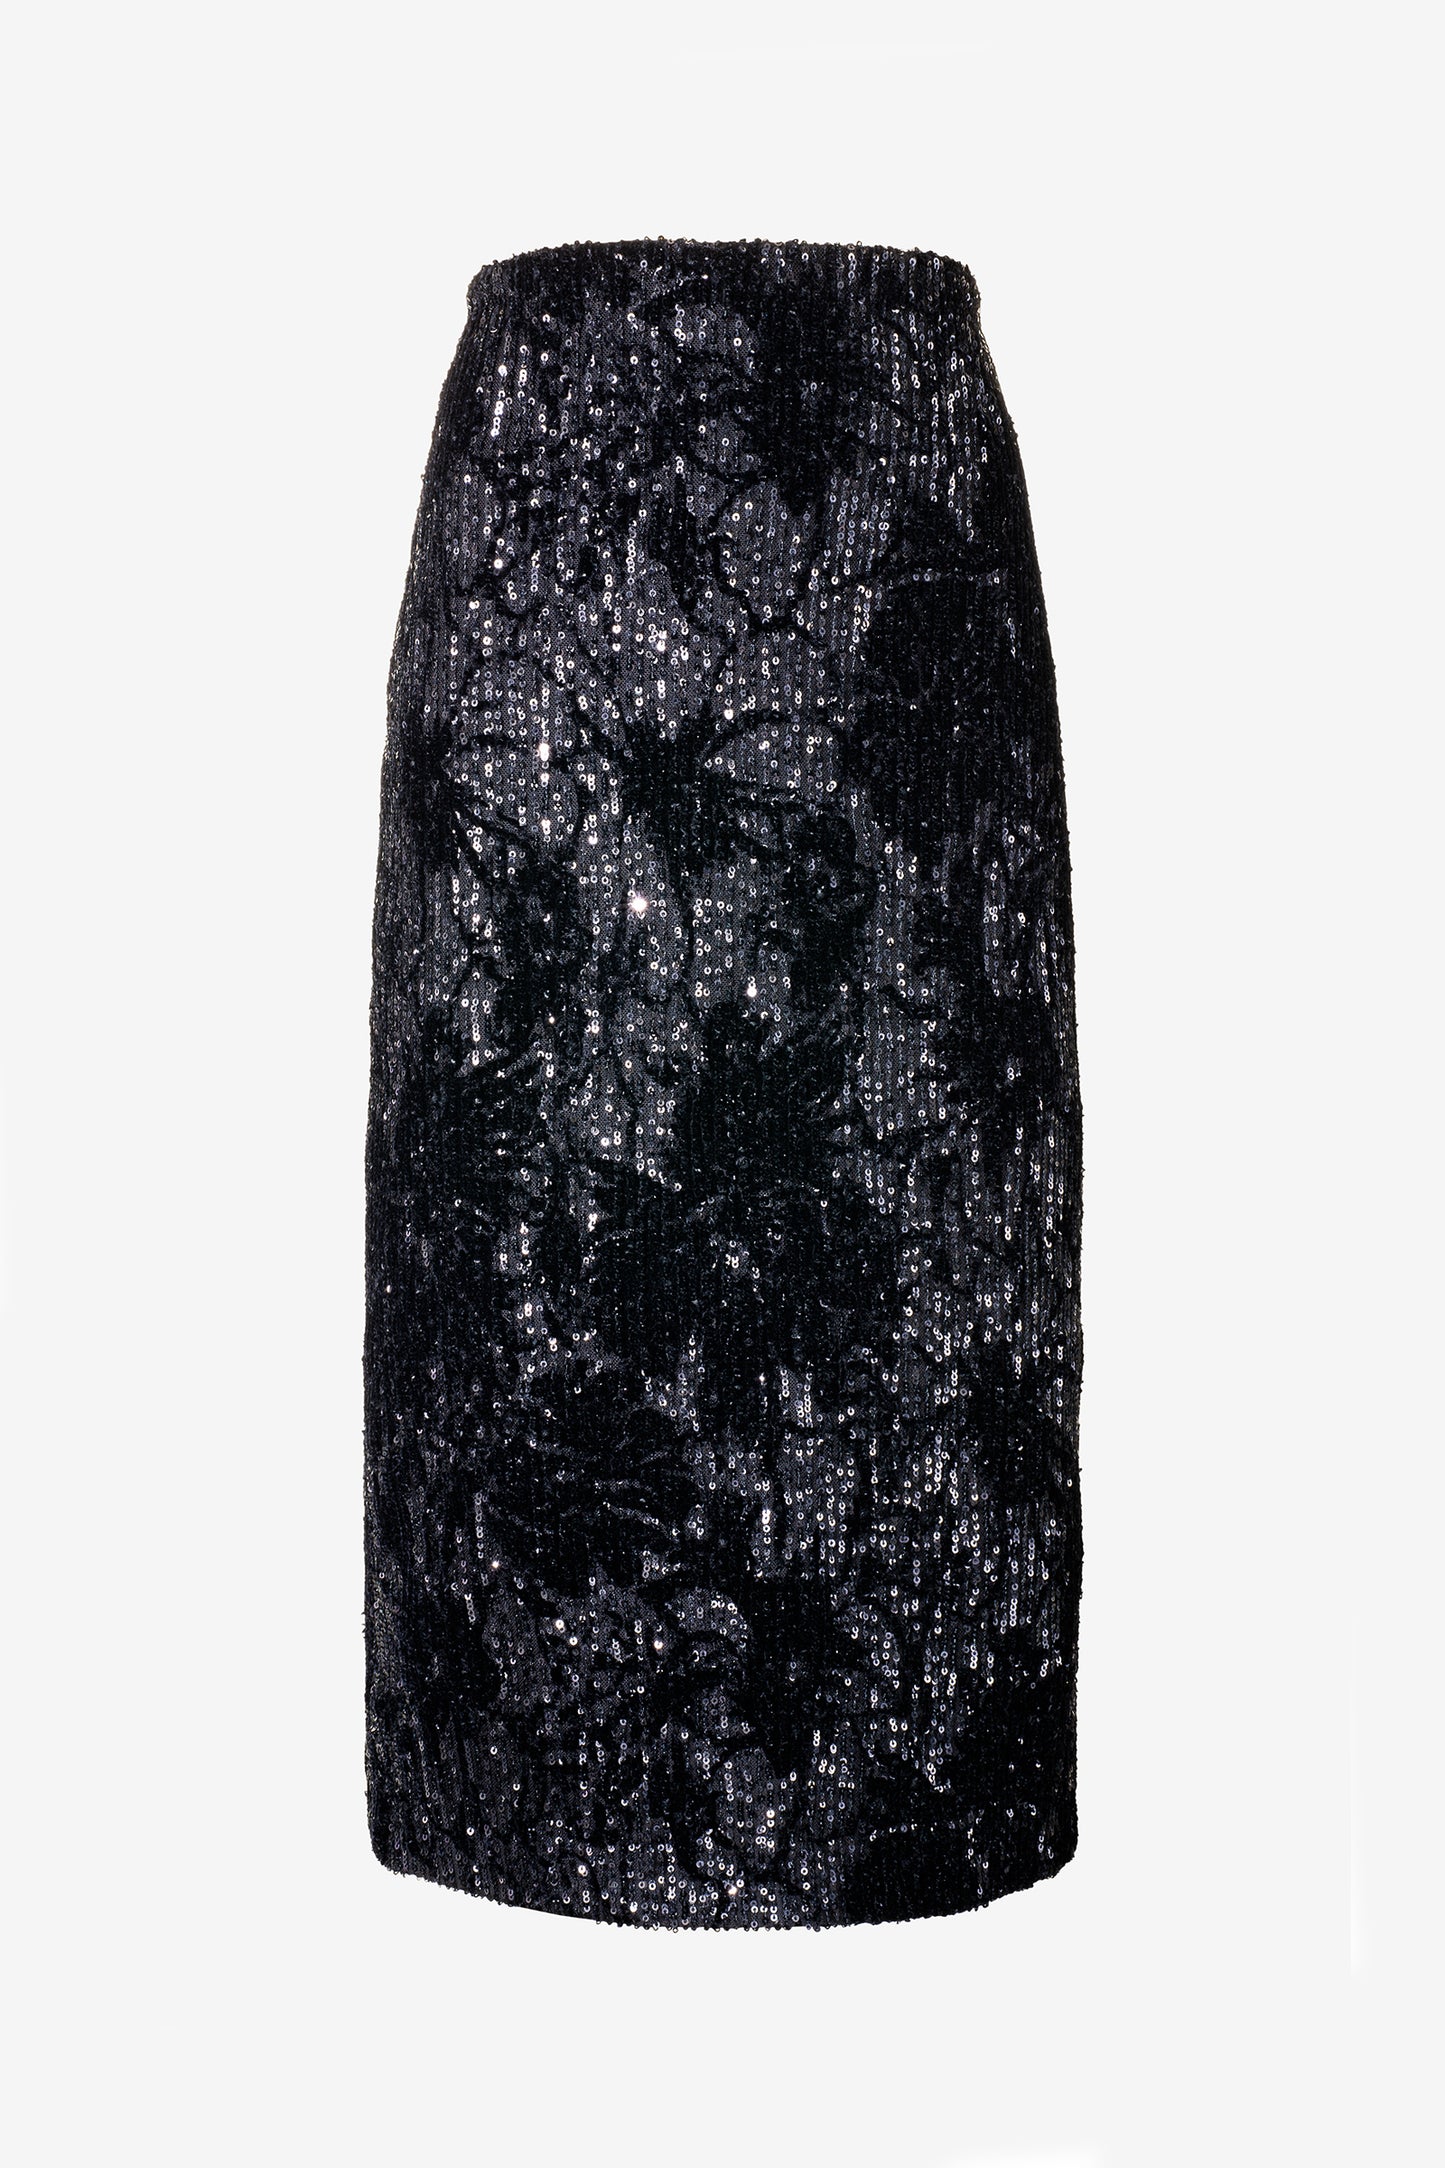 ATHENA - Black skirt